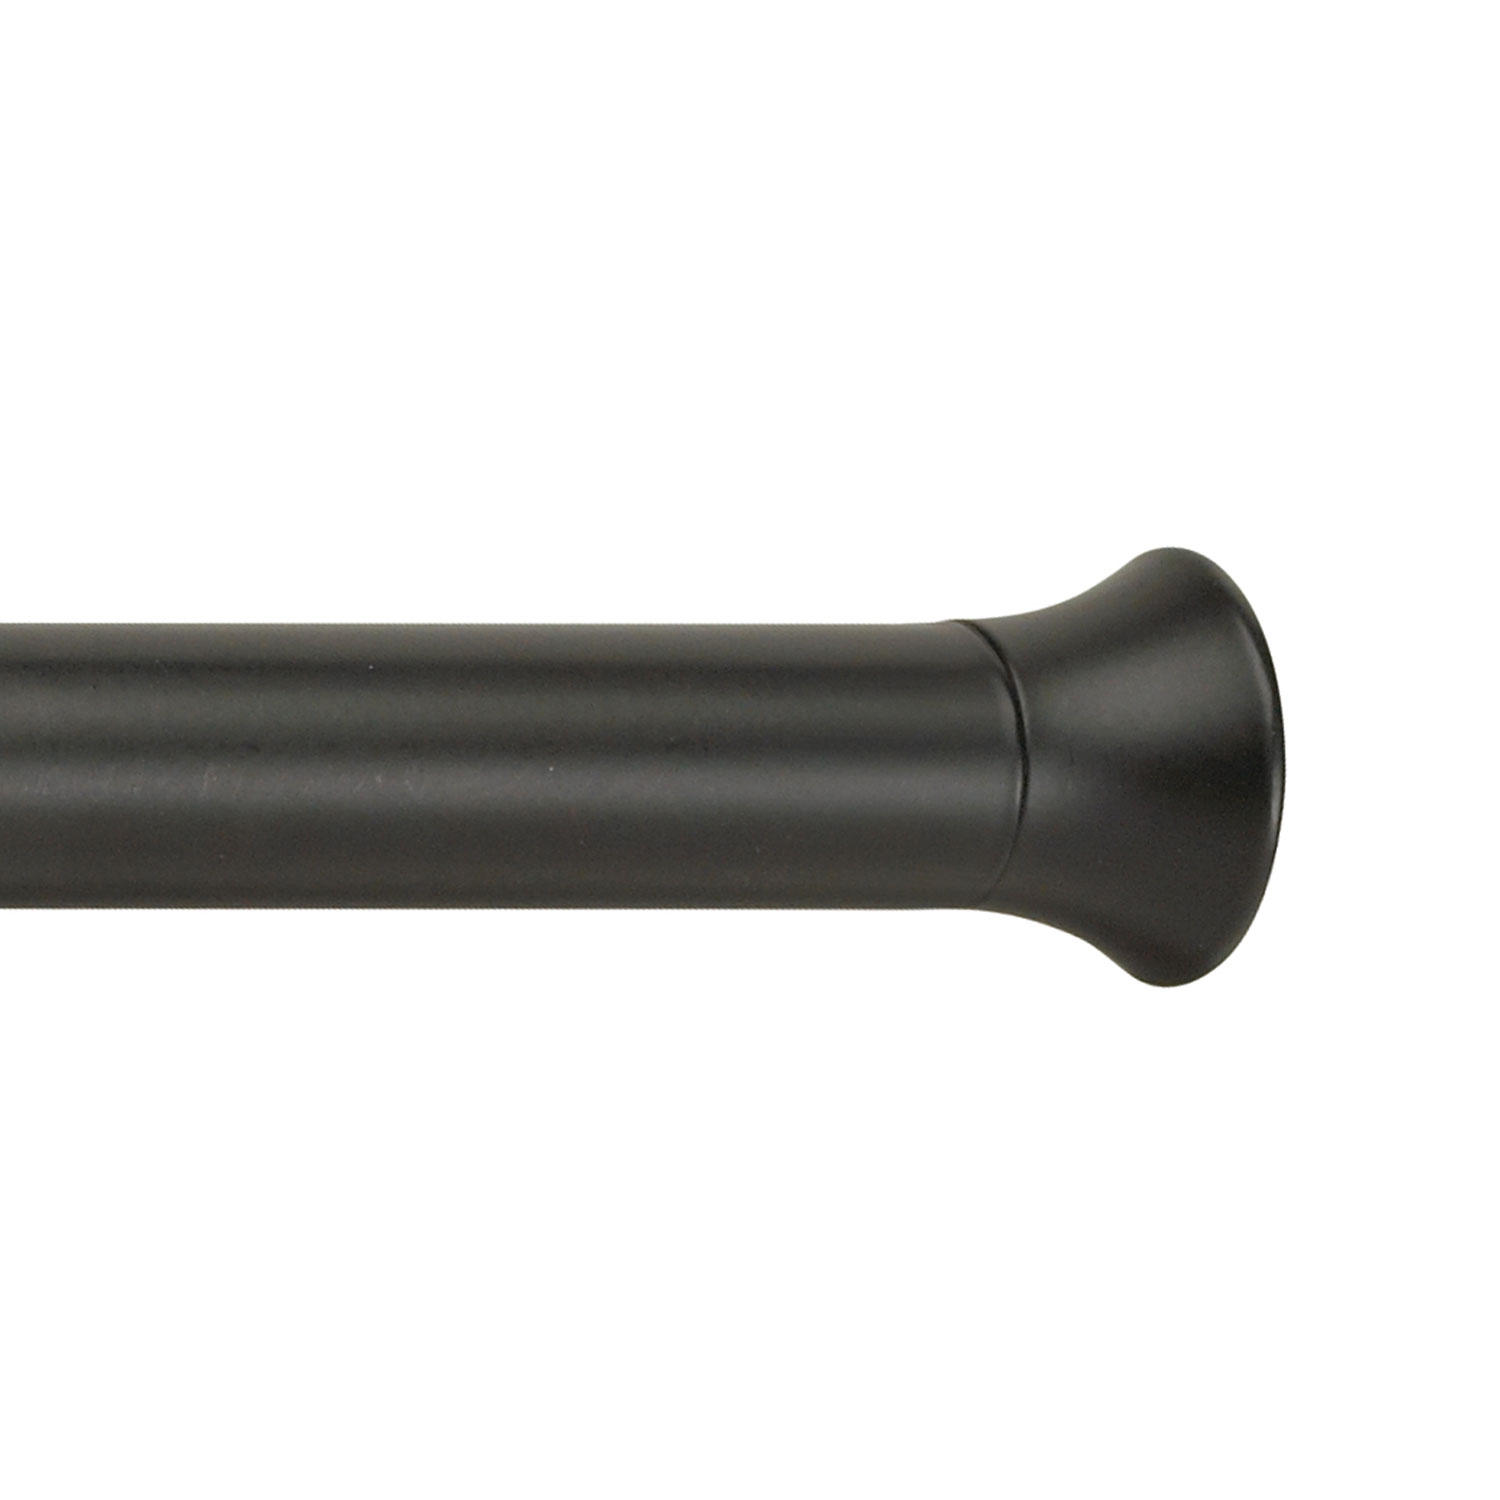 Deco Tension Rod 7/8" diameter, 54-90" length in matte black finish from Umbra